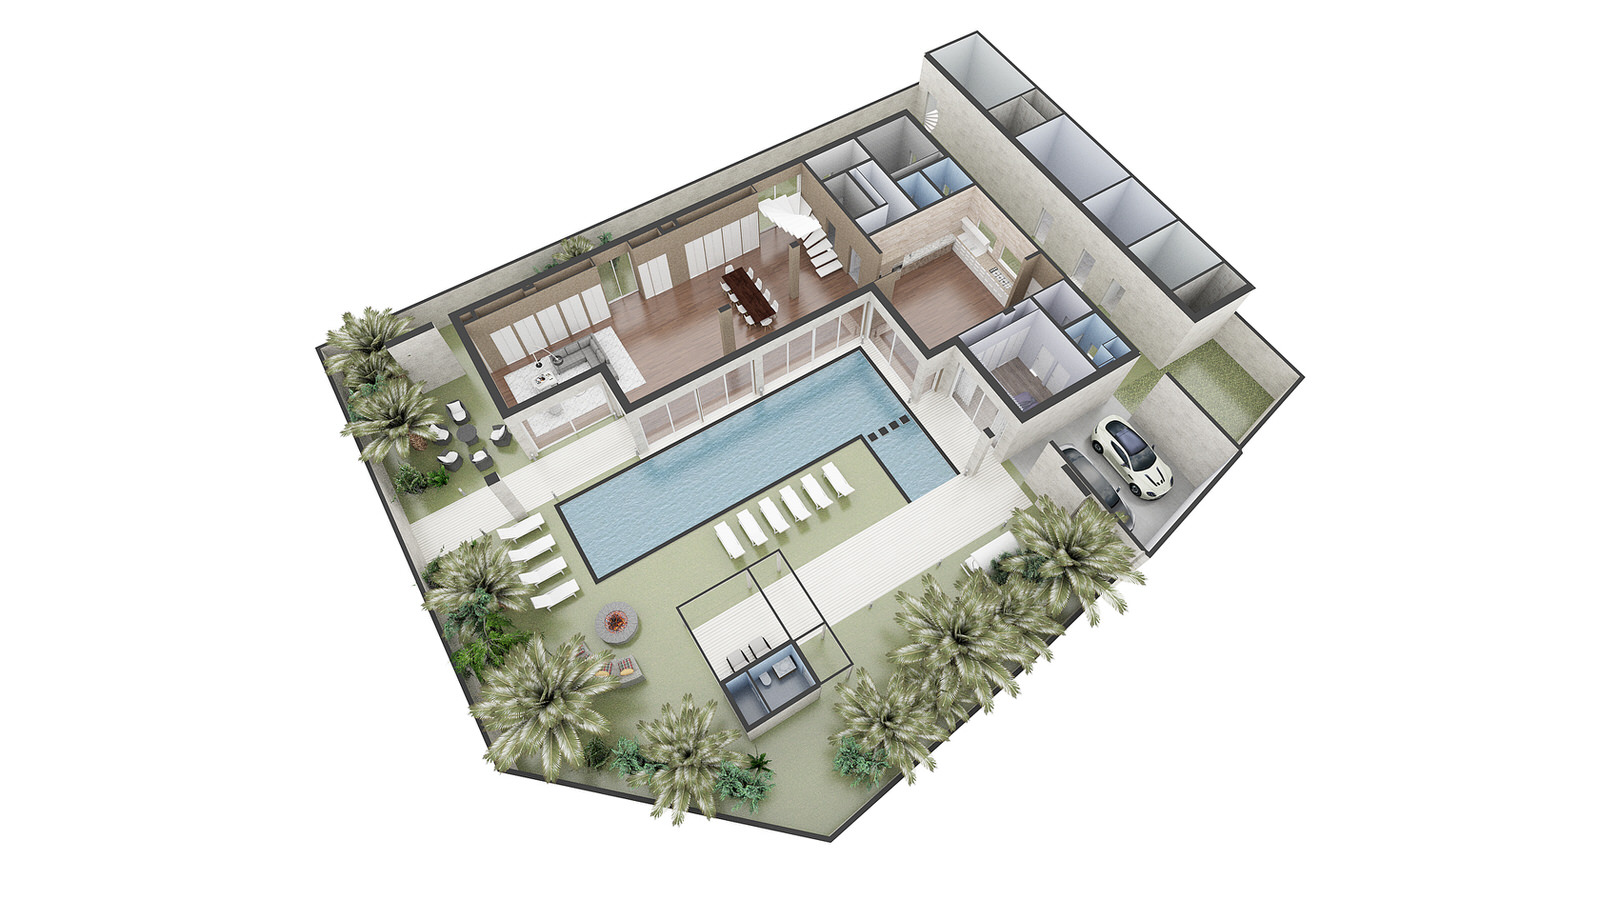 Residential Villa, Dubai slider04.jpg